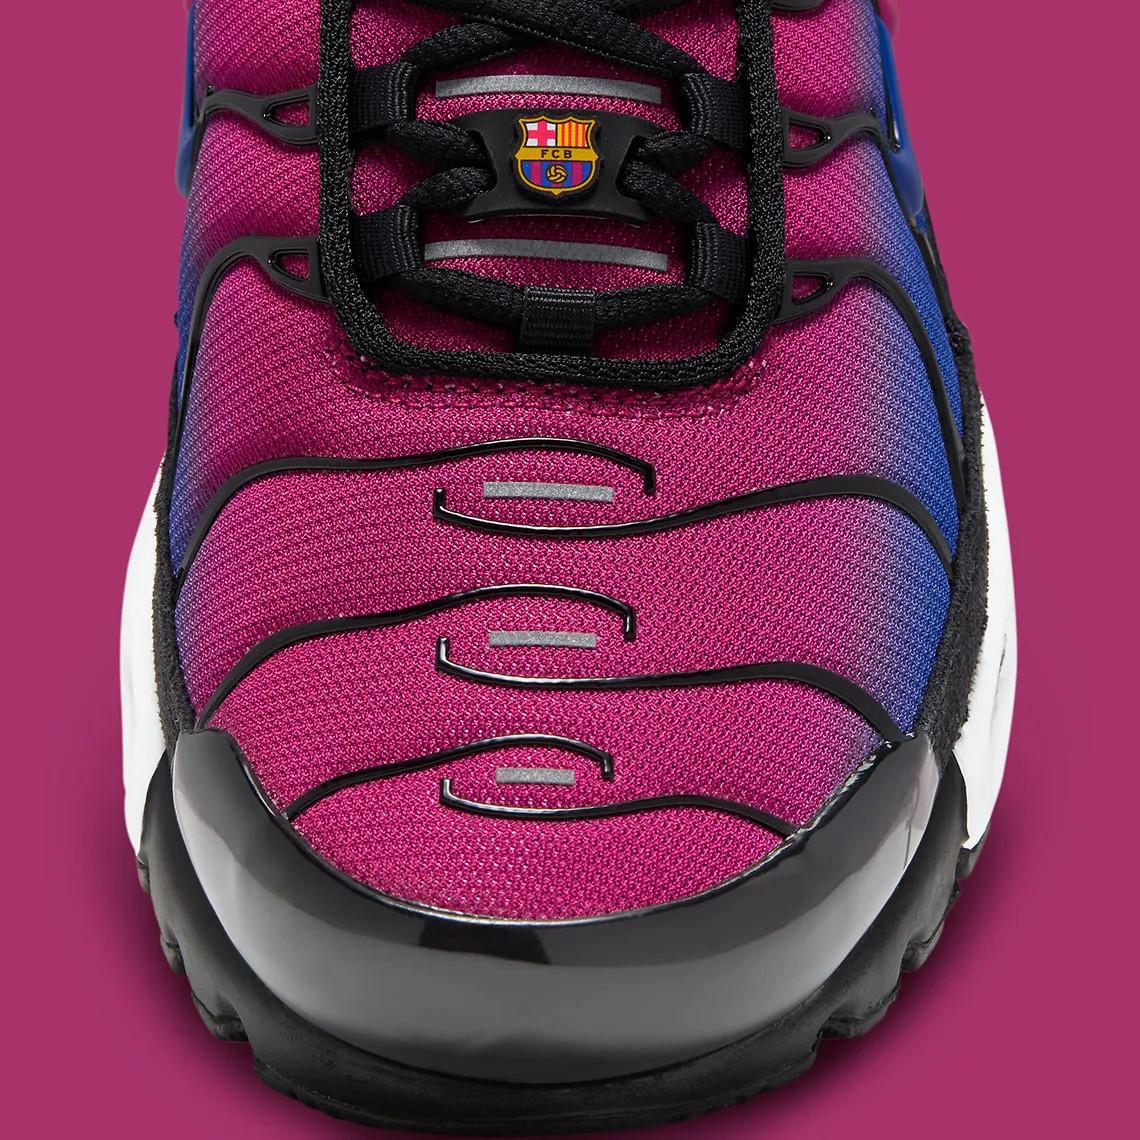 Nike Air Max Plus “F.C. Barcelona” By Patta